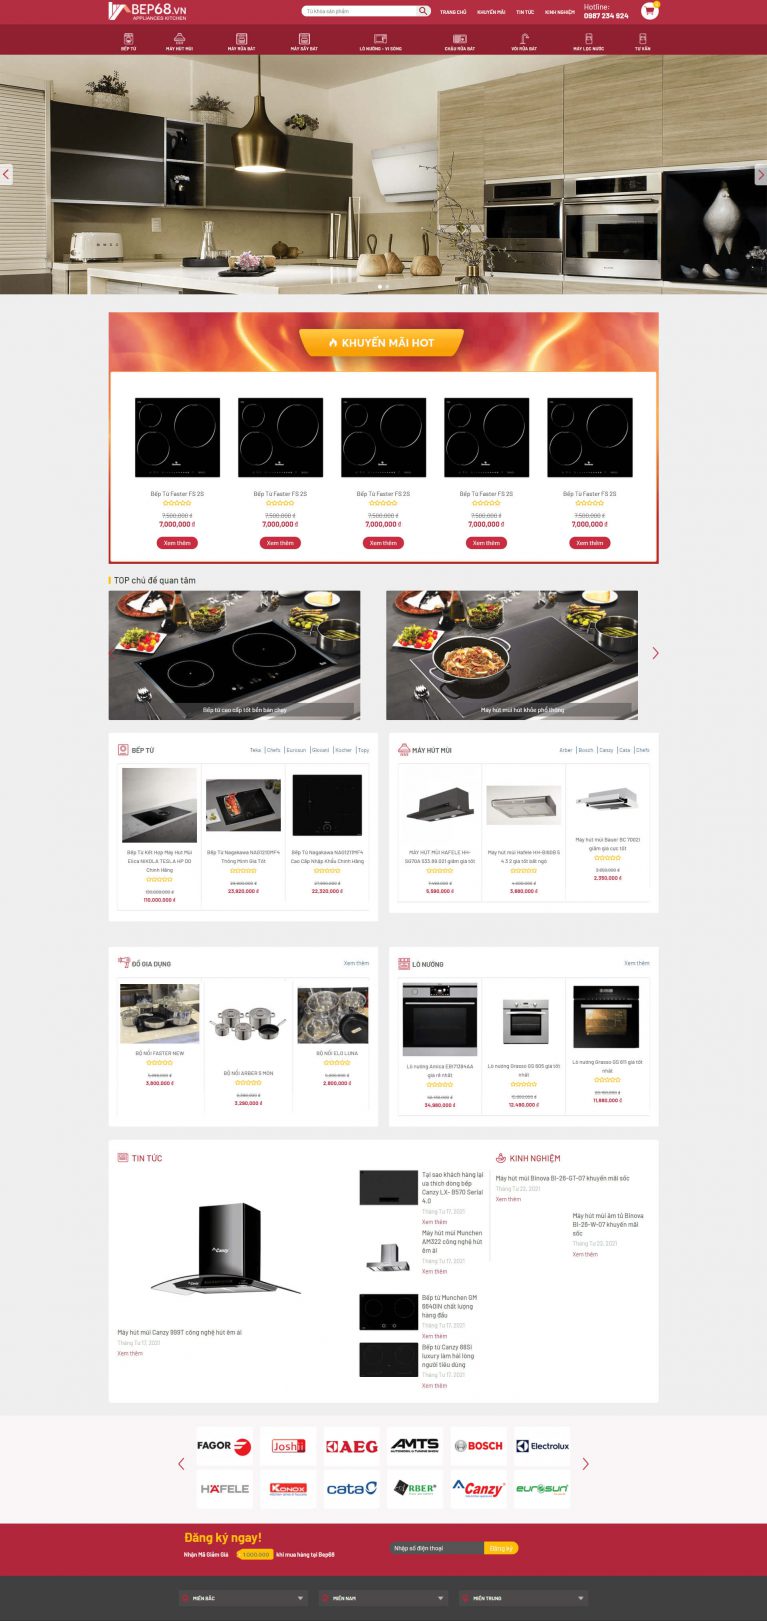 Thiết kế website ngành bếp Bep68.com